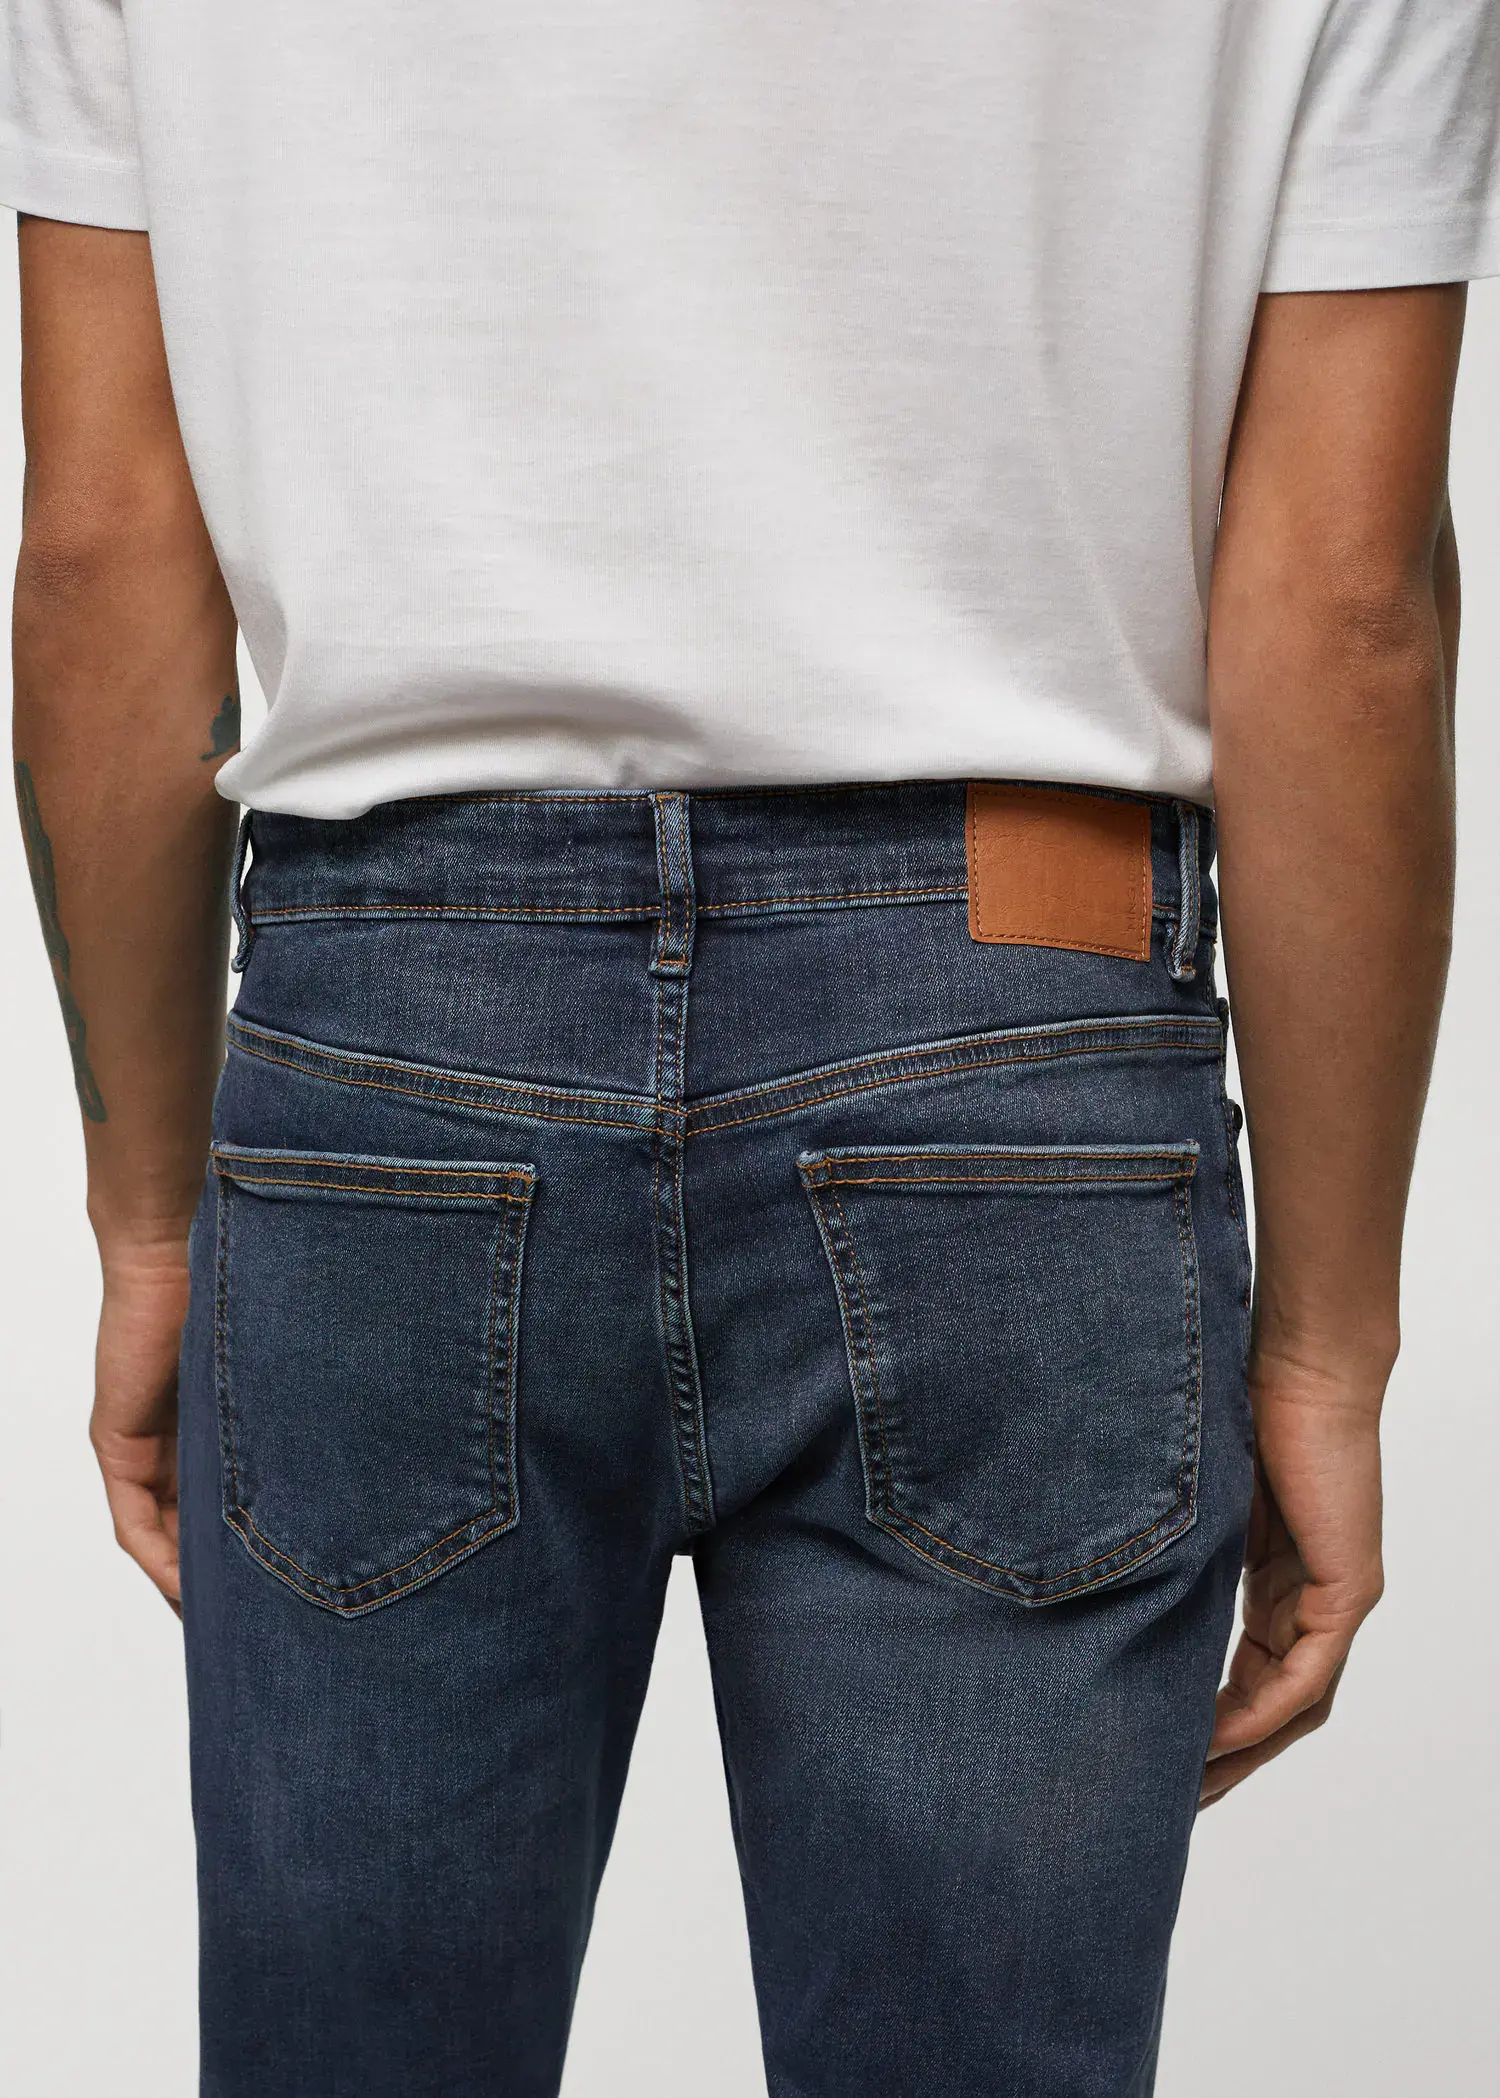 Mango Jude skinny-fit jeans. 3